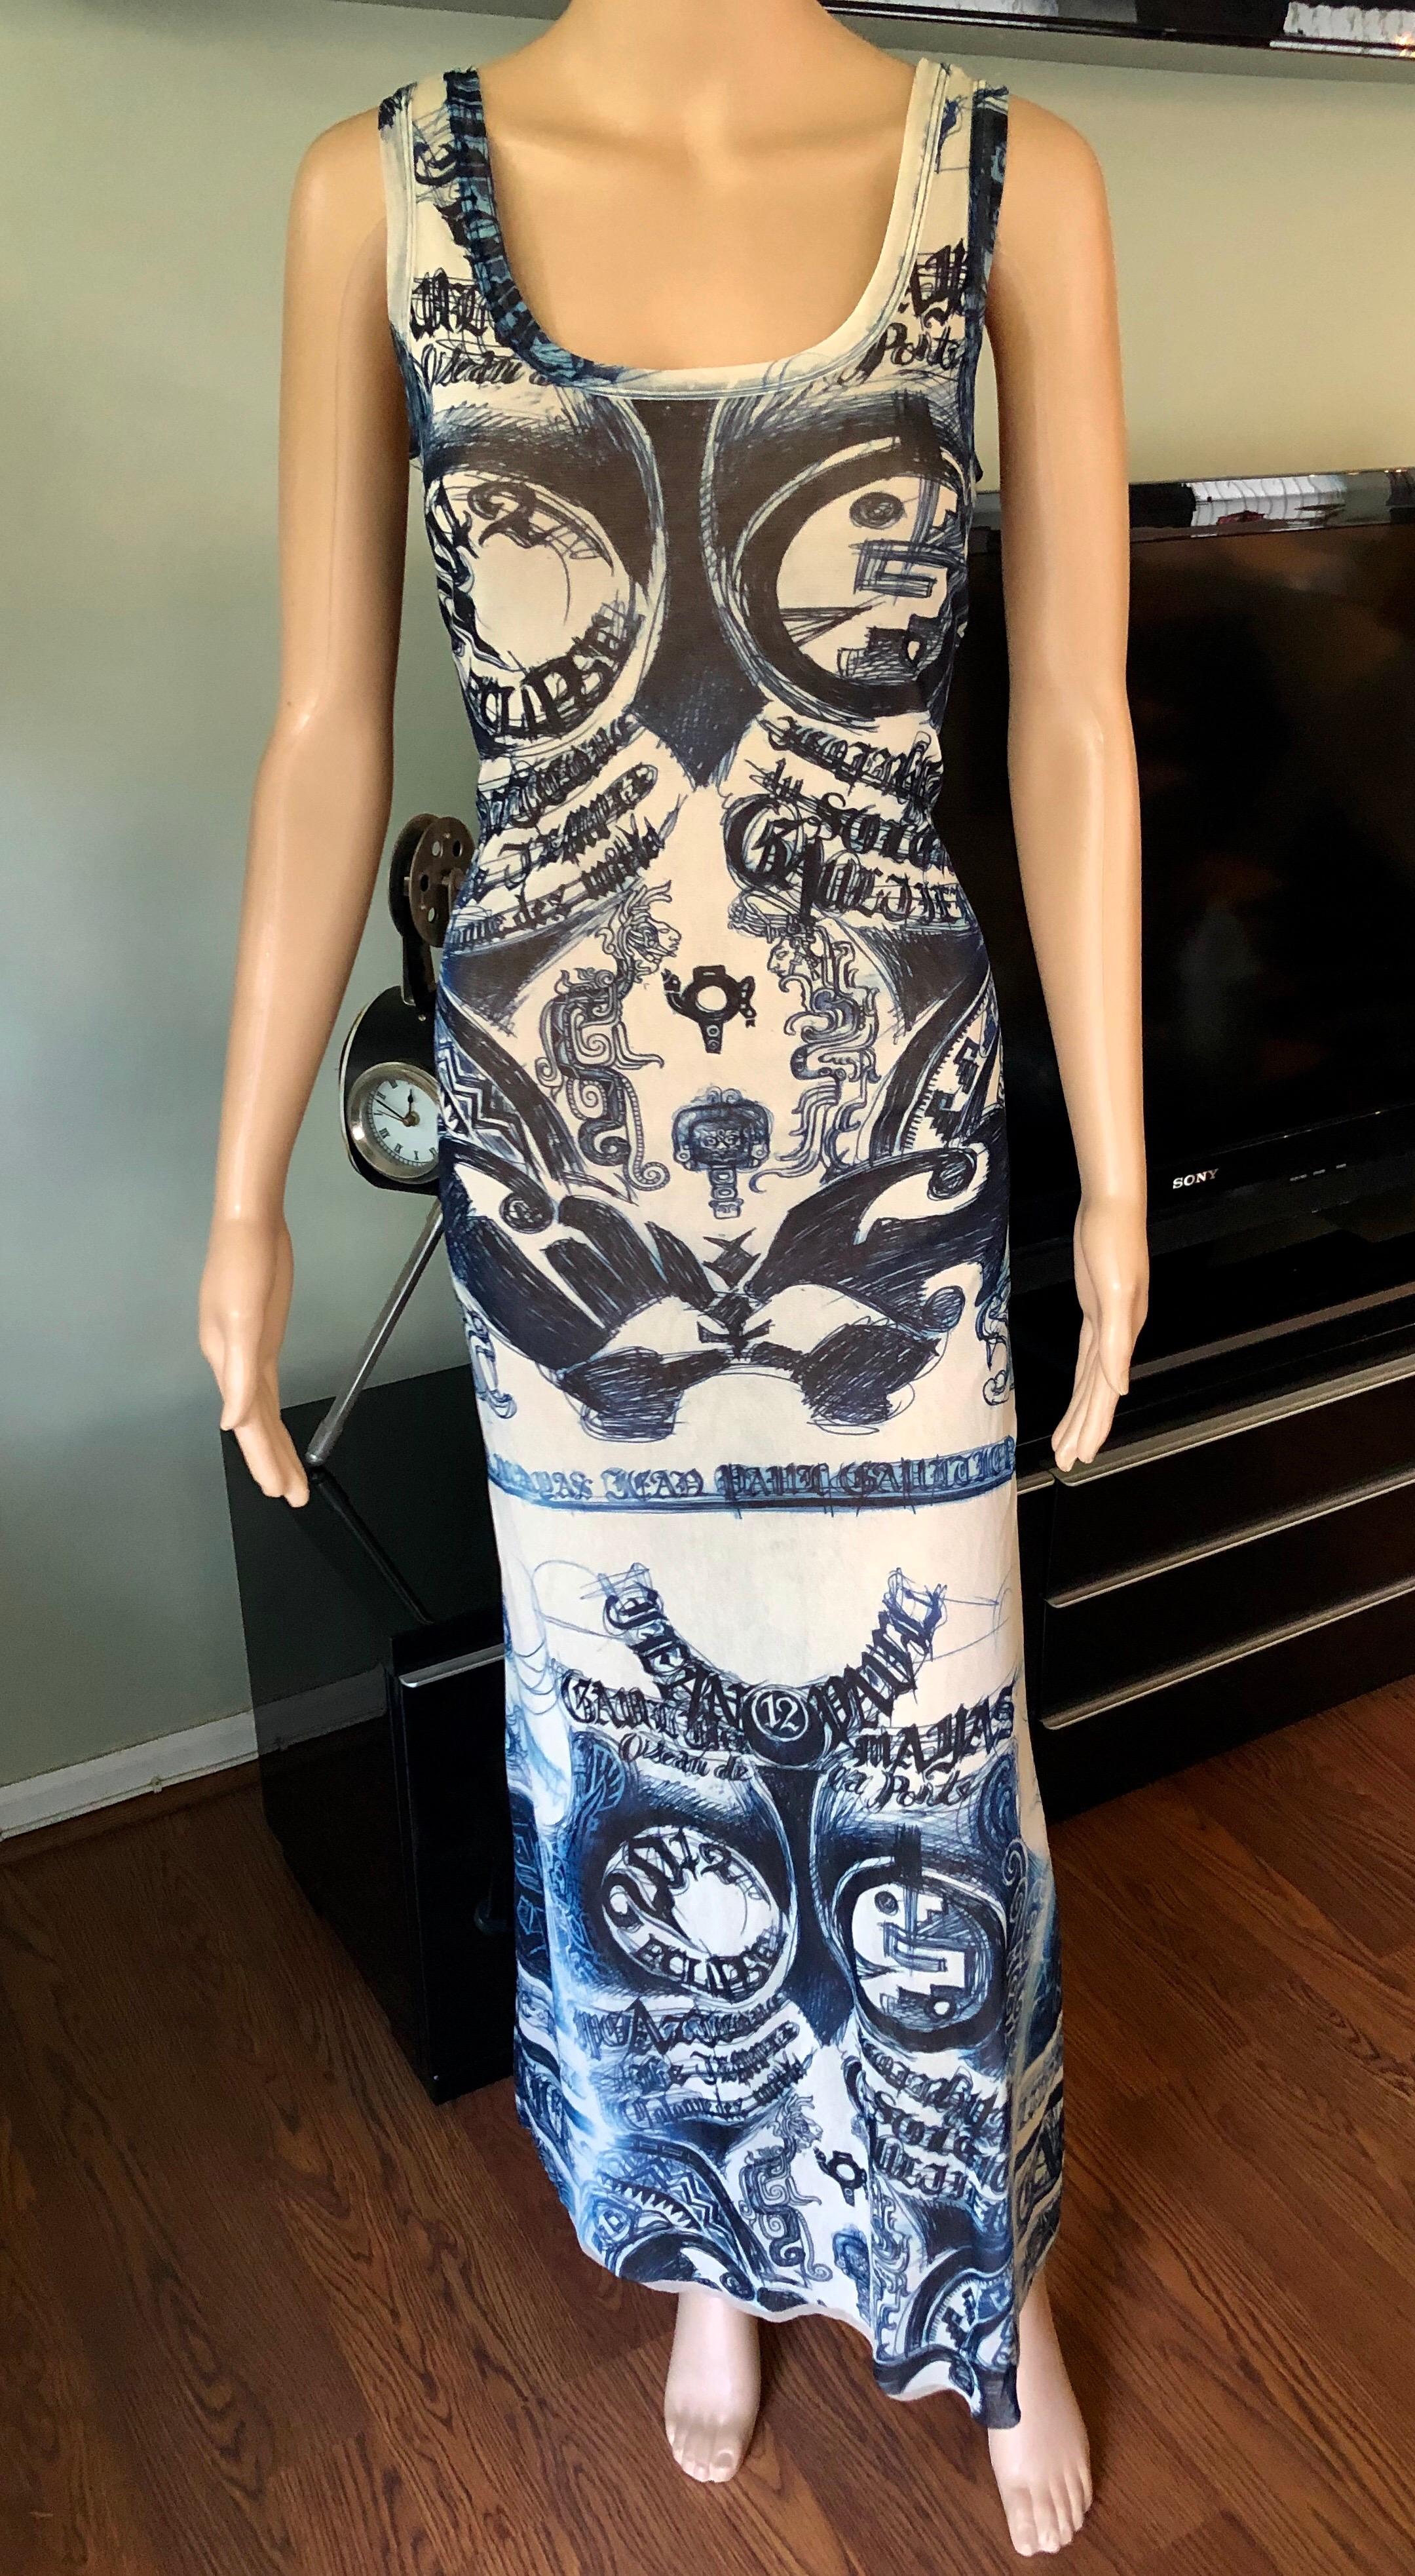 Jean Paul Gaultier Soleil Tattoo Print Semi-Sheer Mesh Bodycon Maxi Dress Size L

Excellent Condition